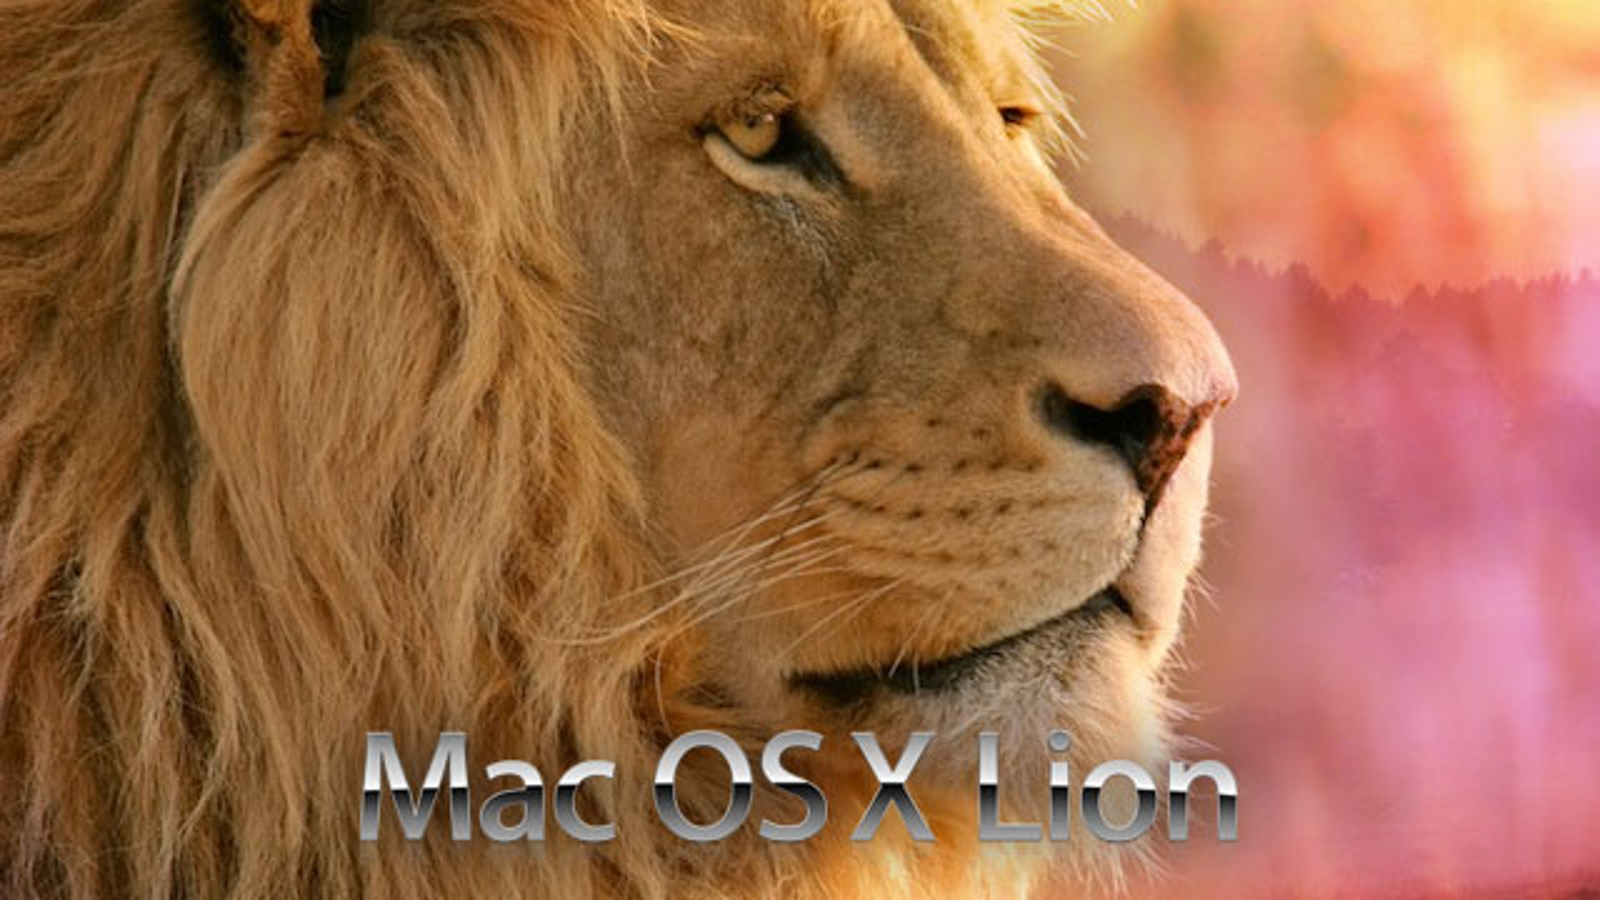 mac os x lion isodmg 10.7 download